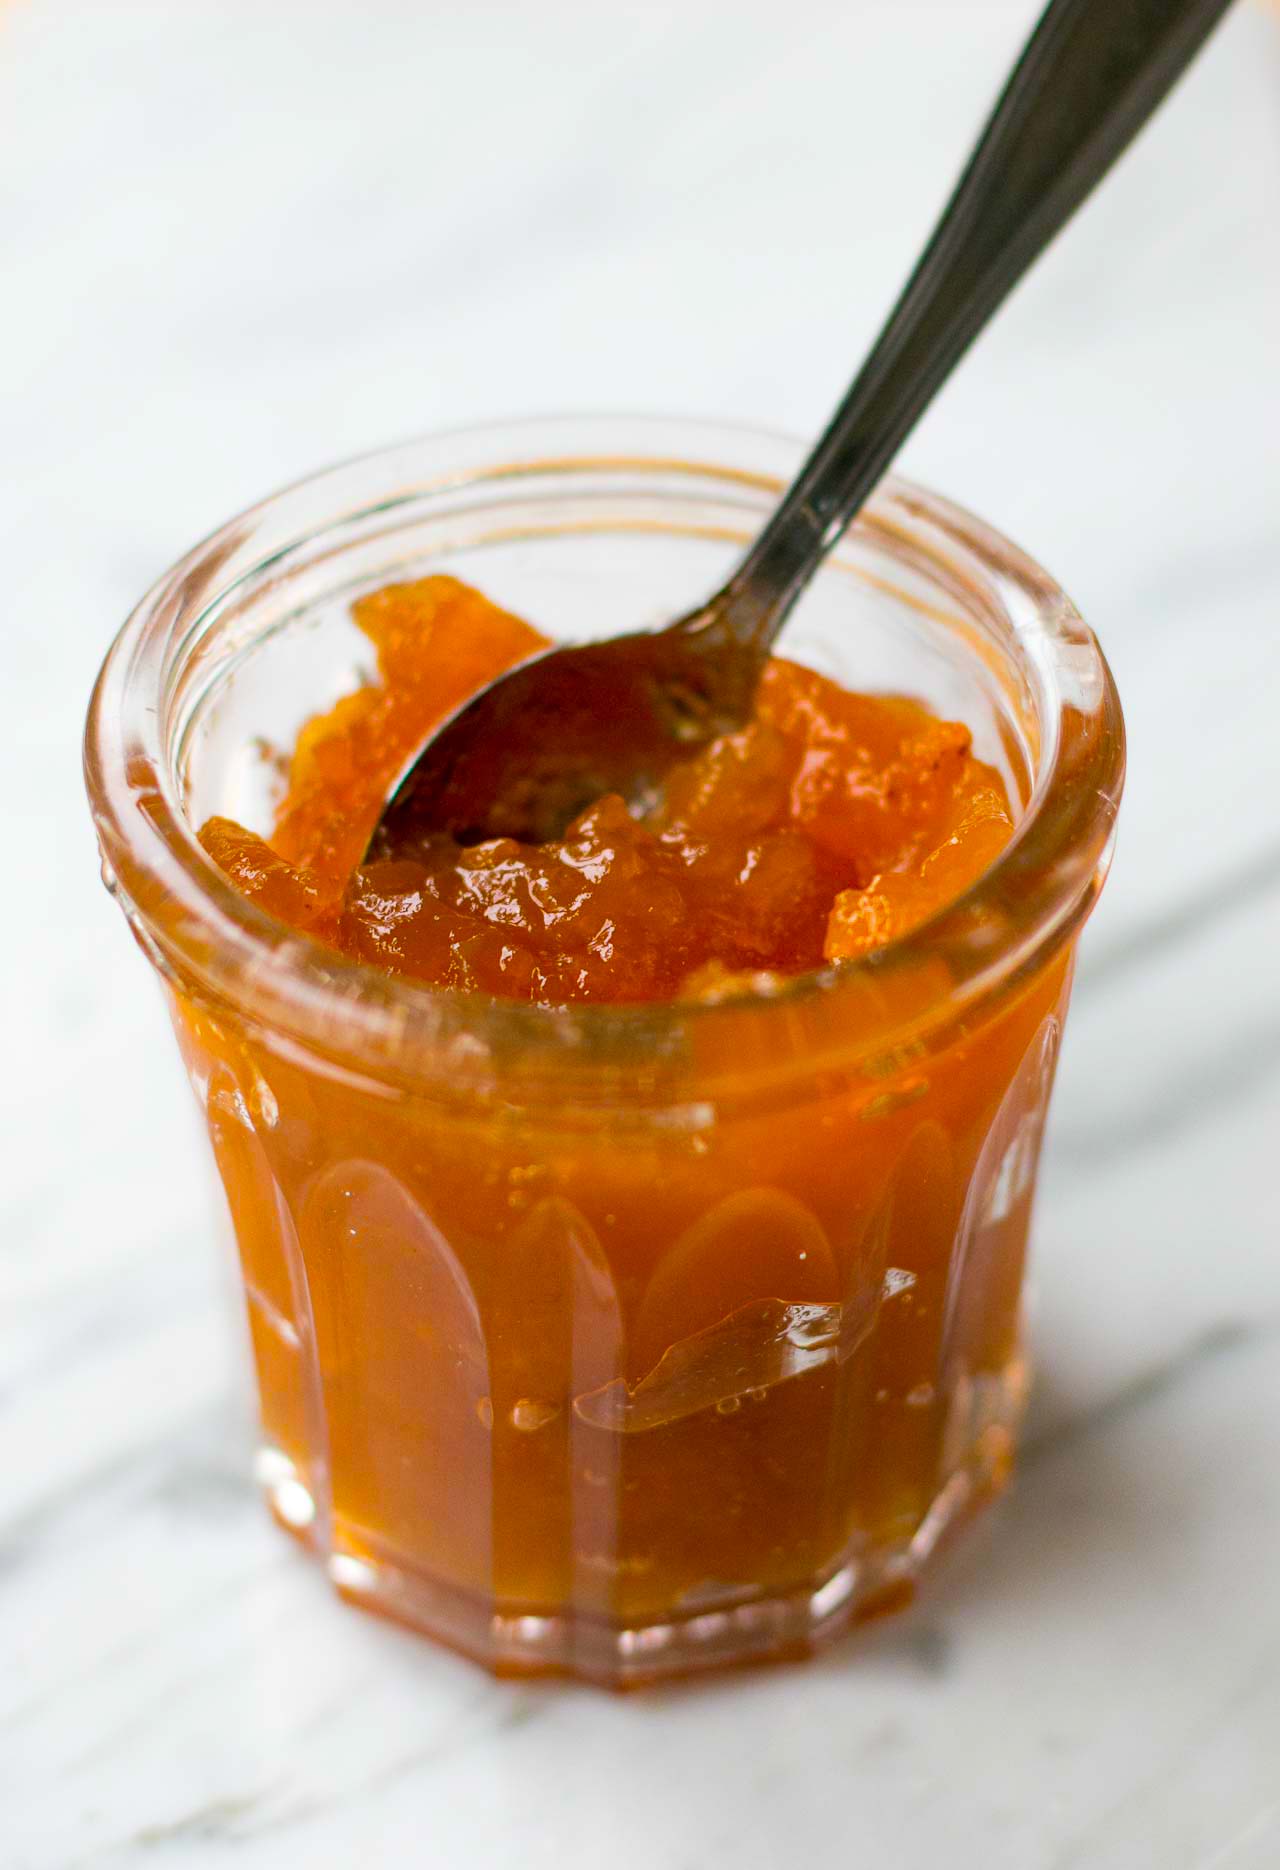 Apricot jam recipe